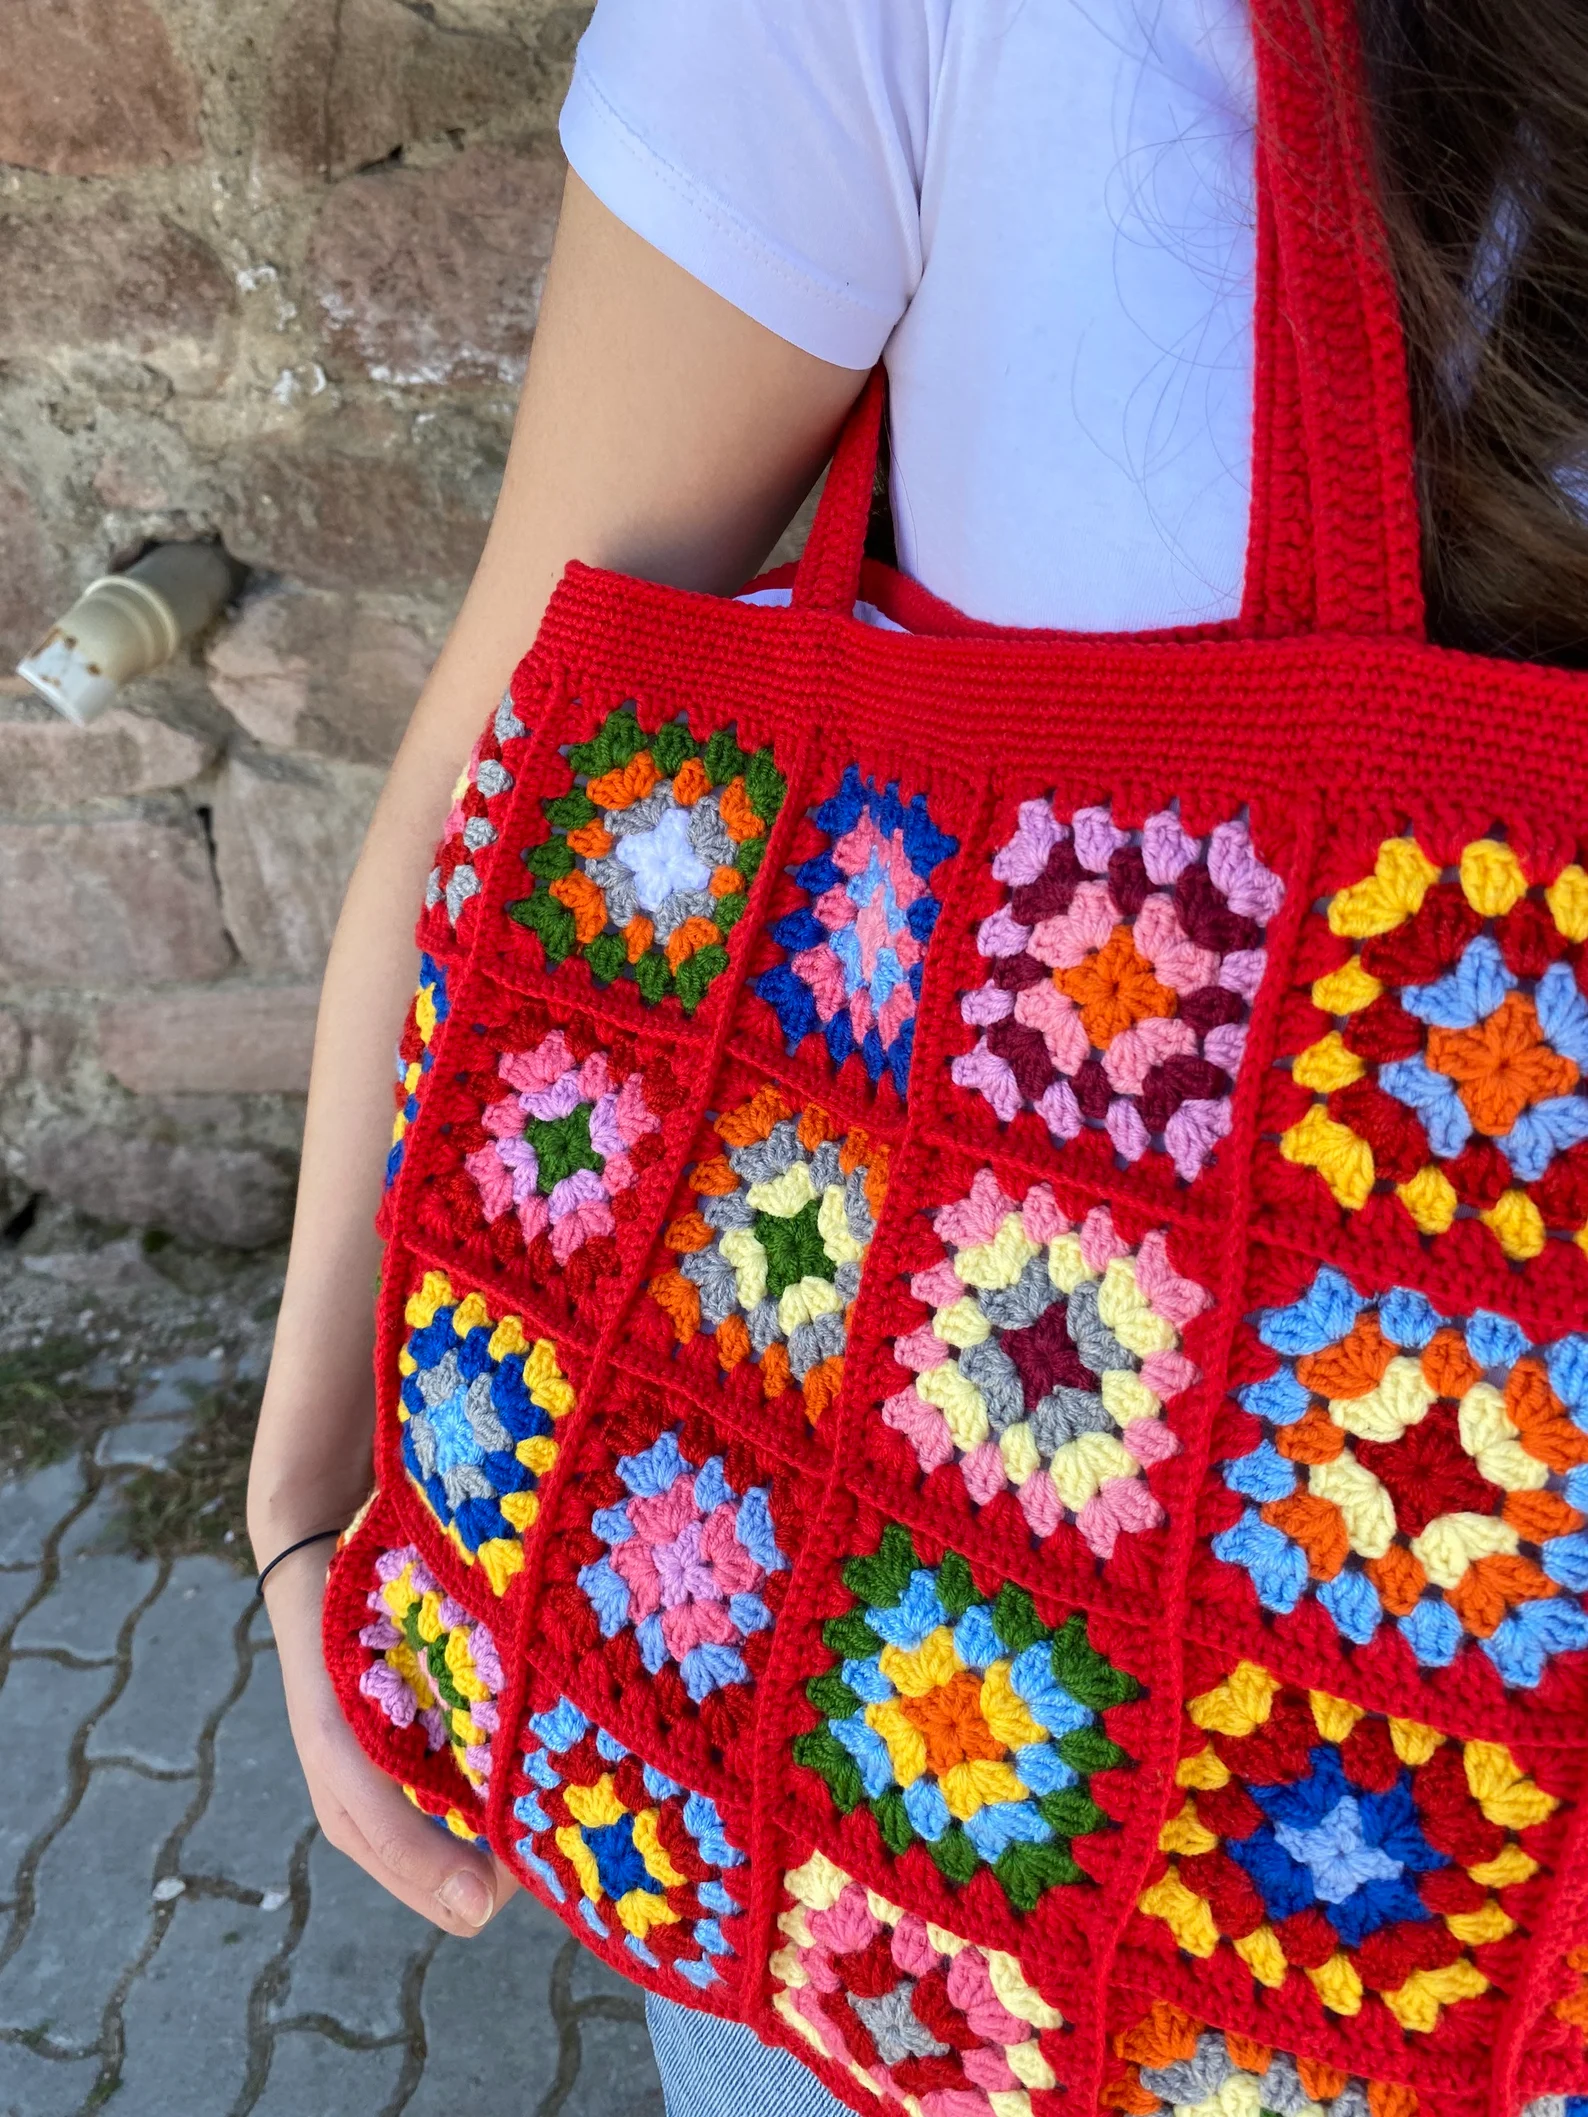 Granny Square Bag Patterns - Red Ted Art - Kids Crafts